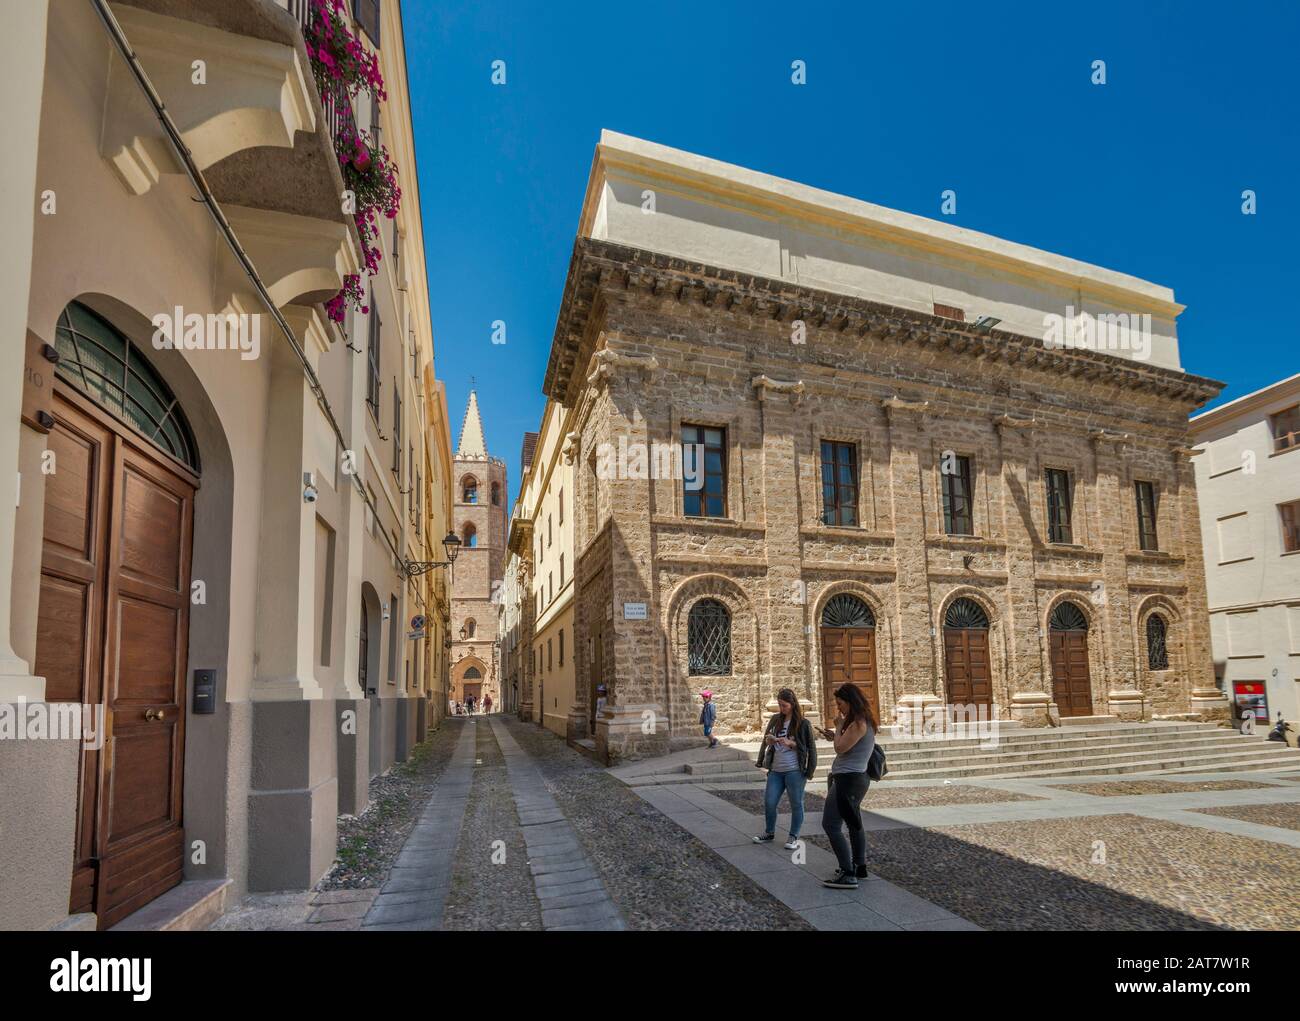 Narrow Street Alghero Sardinia Italy High Resolution Stock Photography and  Images - Alamy